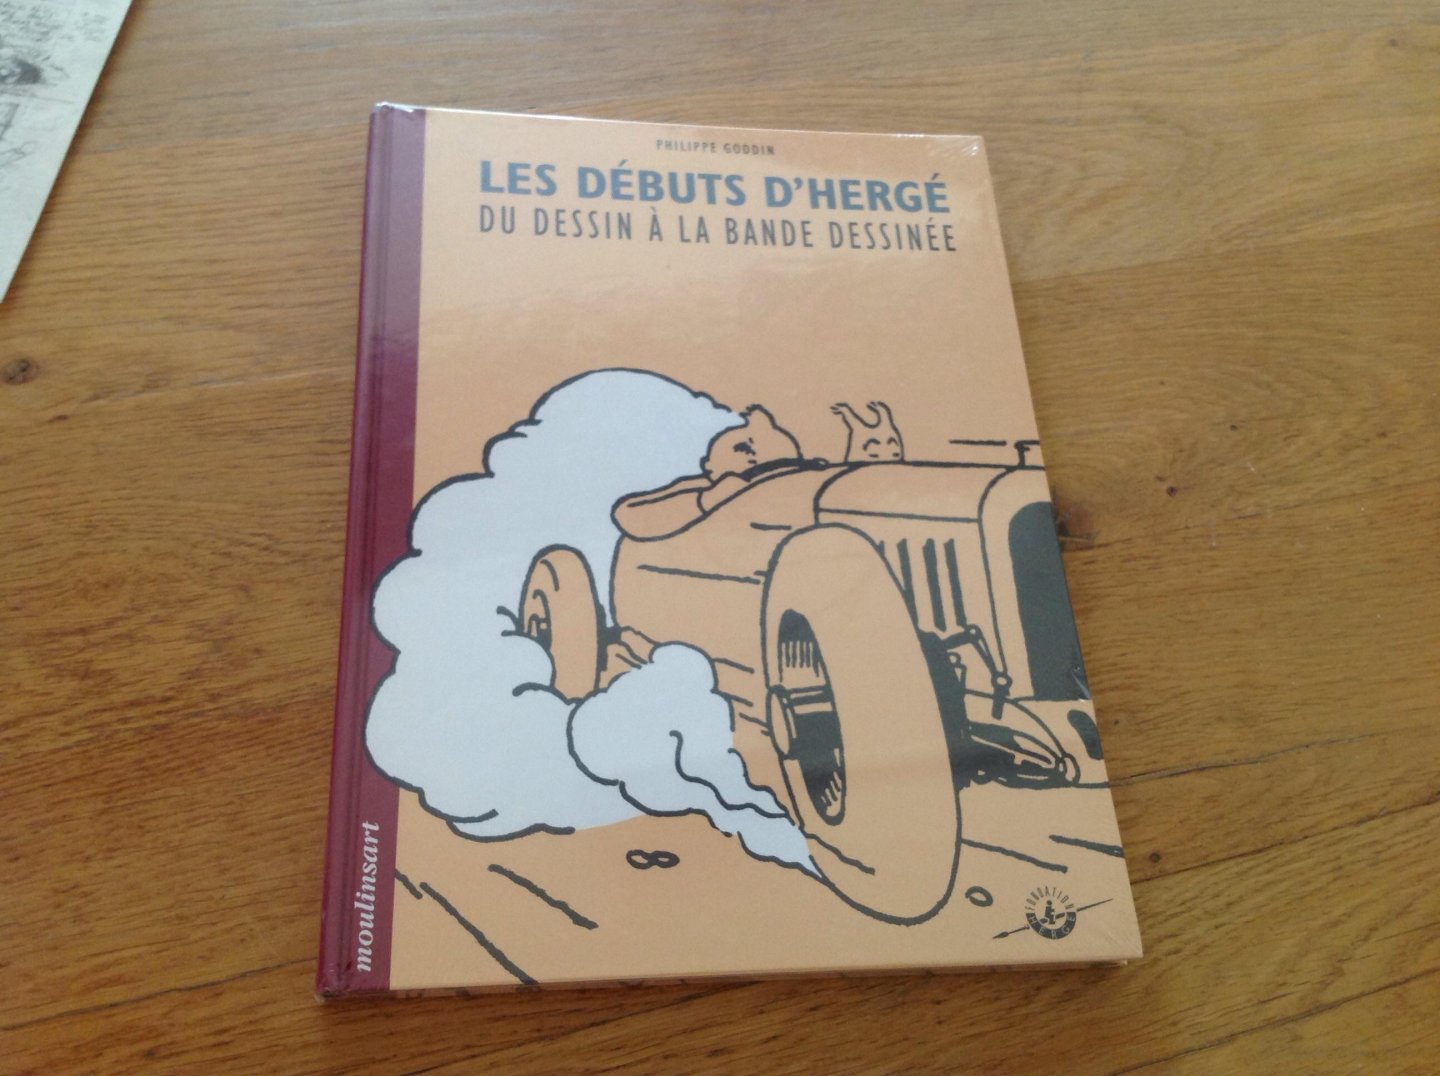 Philippe goddin - Les debuts d'Herge +facsimile